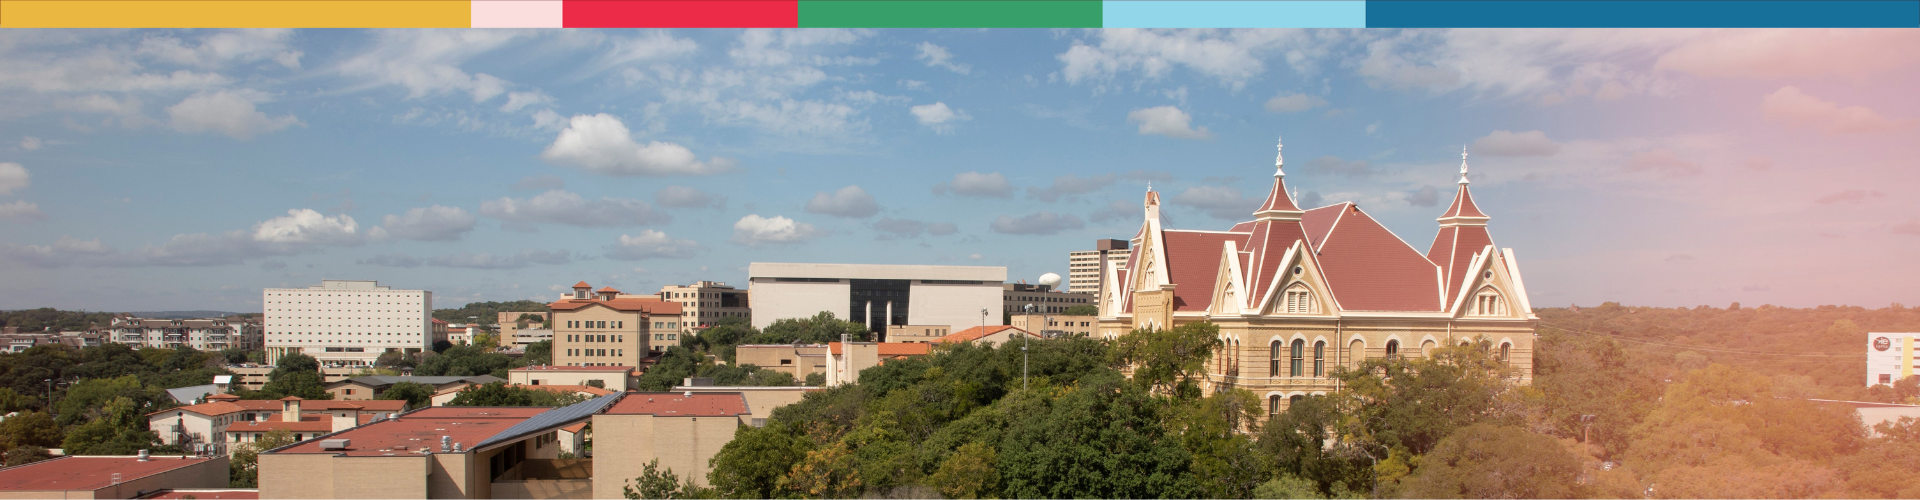 A skyline of Texas State university on a sunny day.